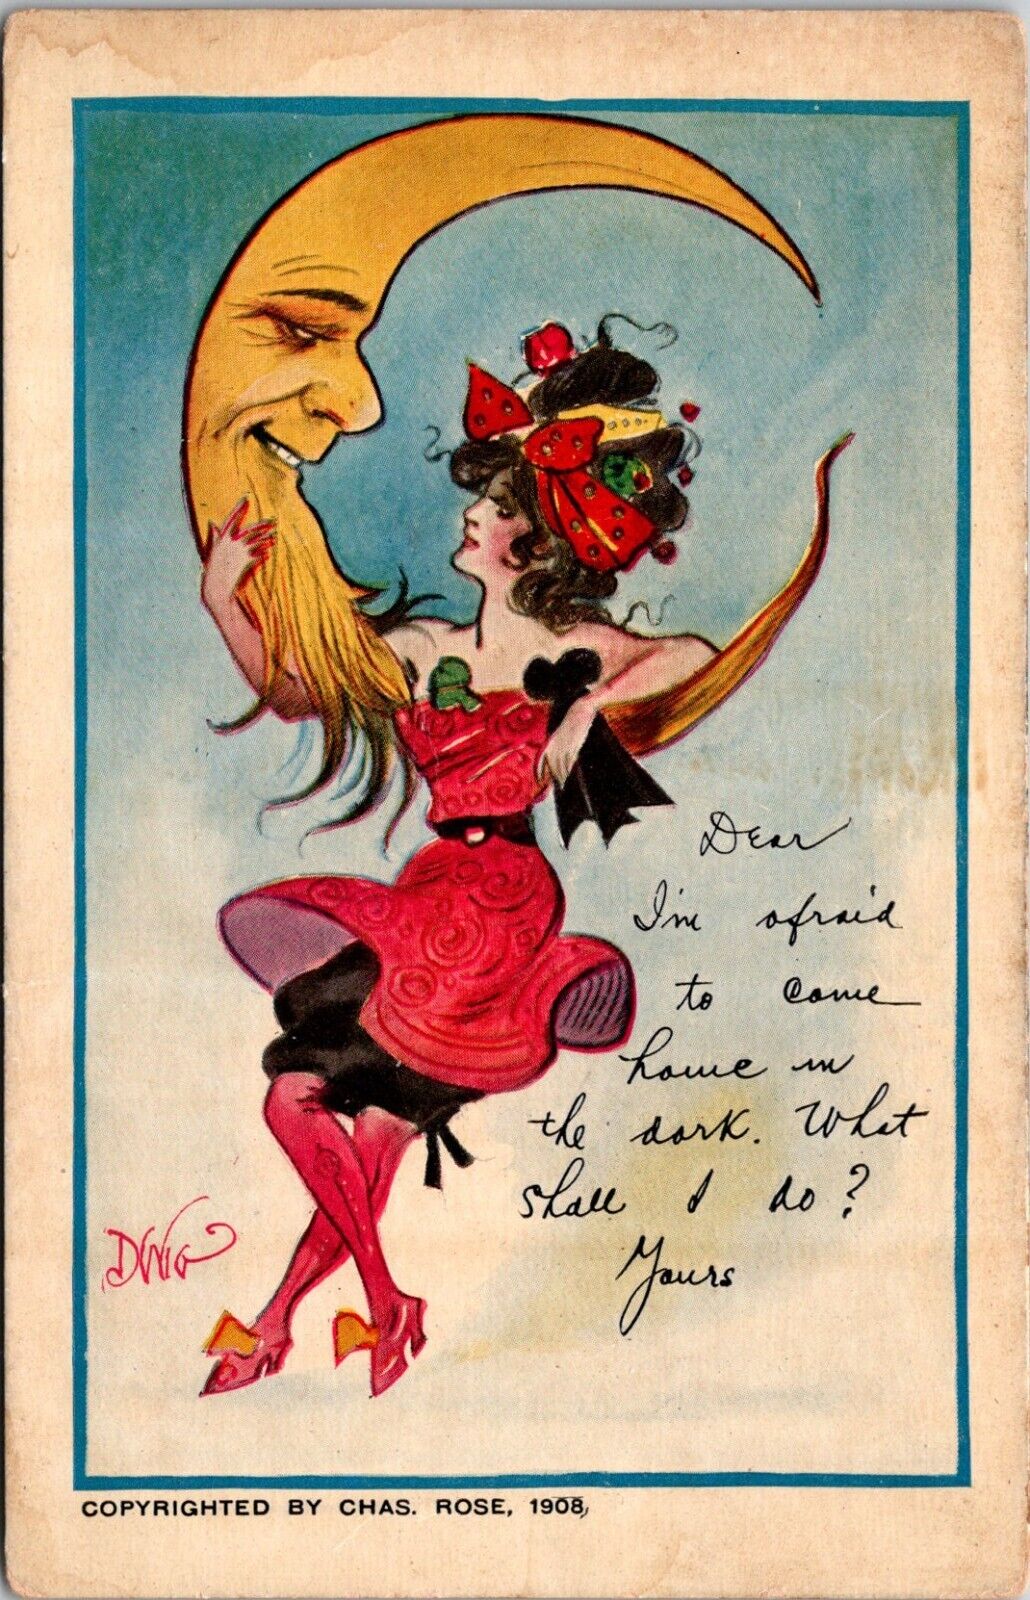 1900s Romance Postcard Woman Embracing The Moon Charles Rose 1908 D.W.G. Artist